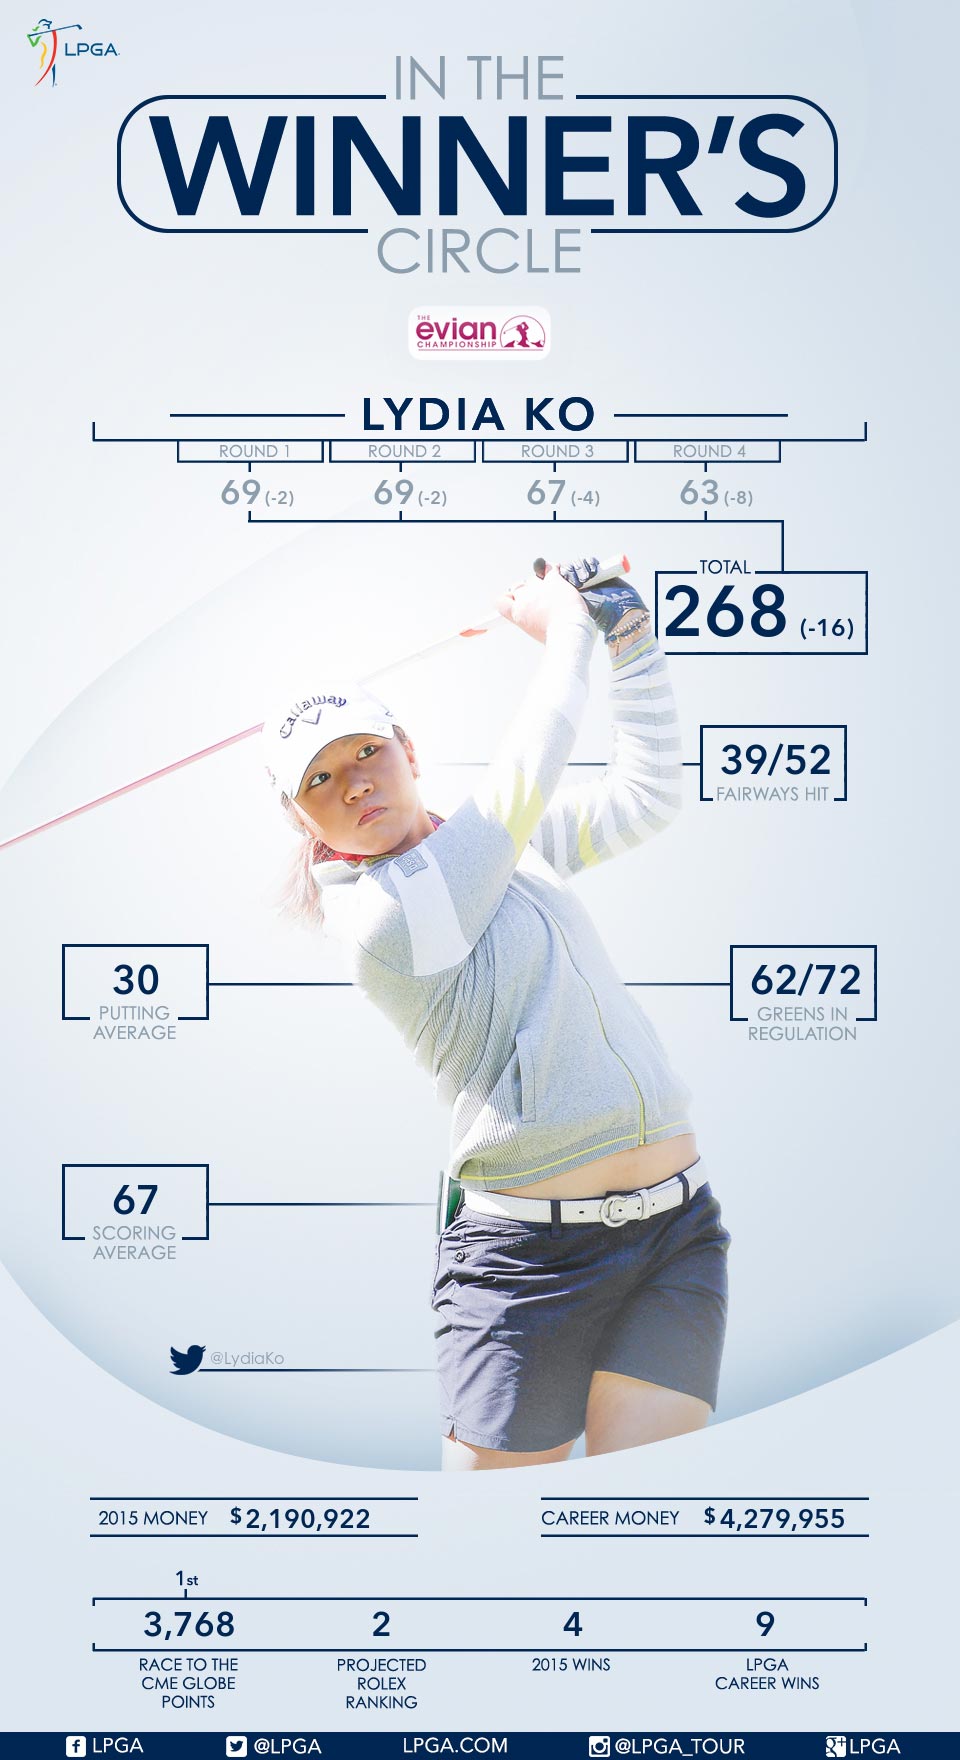 Lydia Ko wins first career major at 2015 Evian Championship